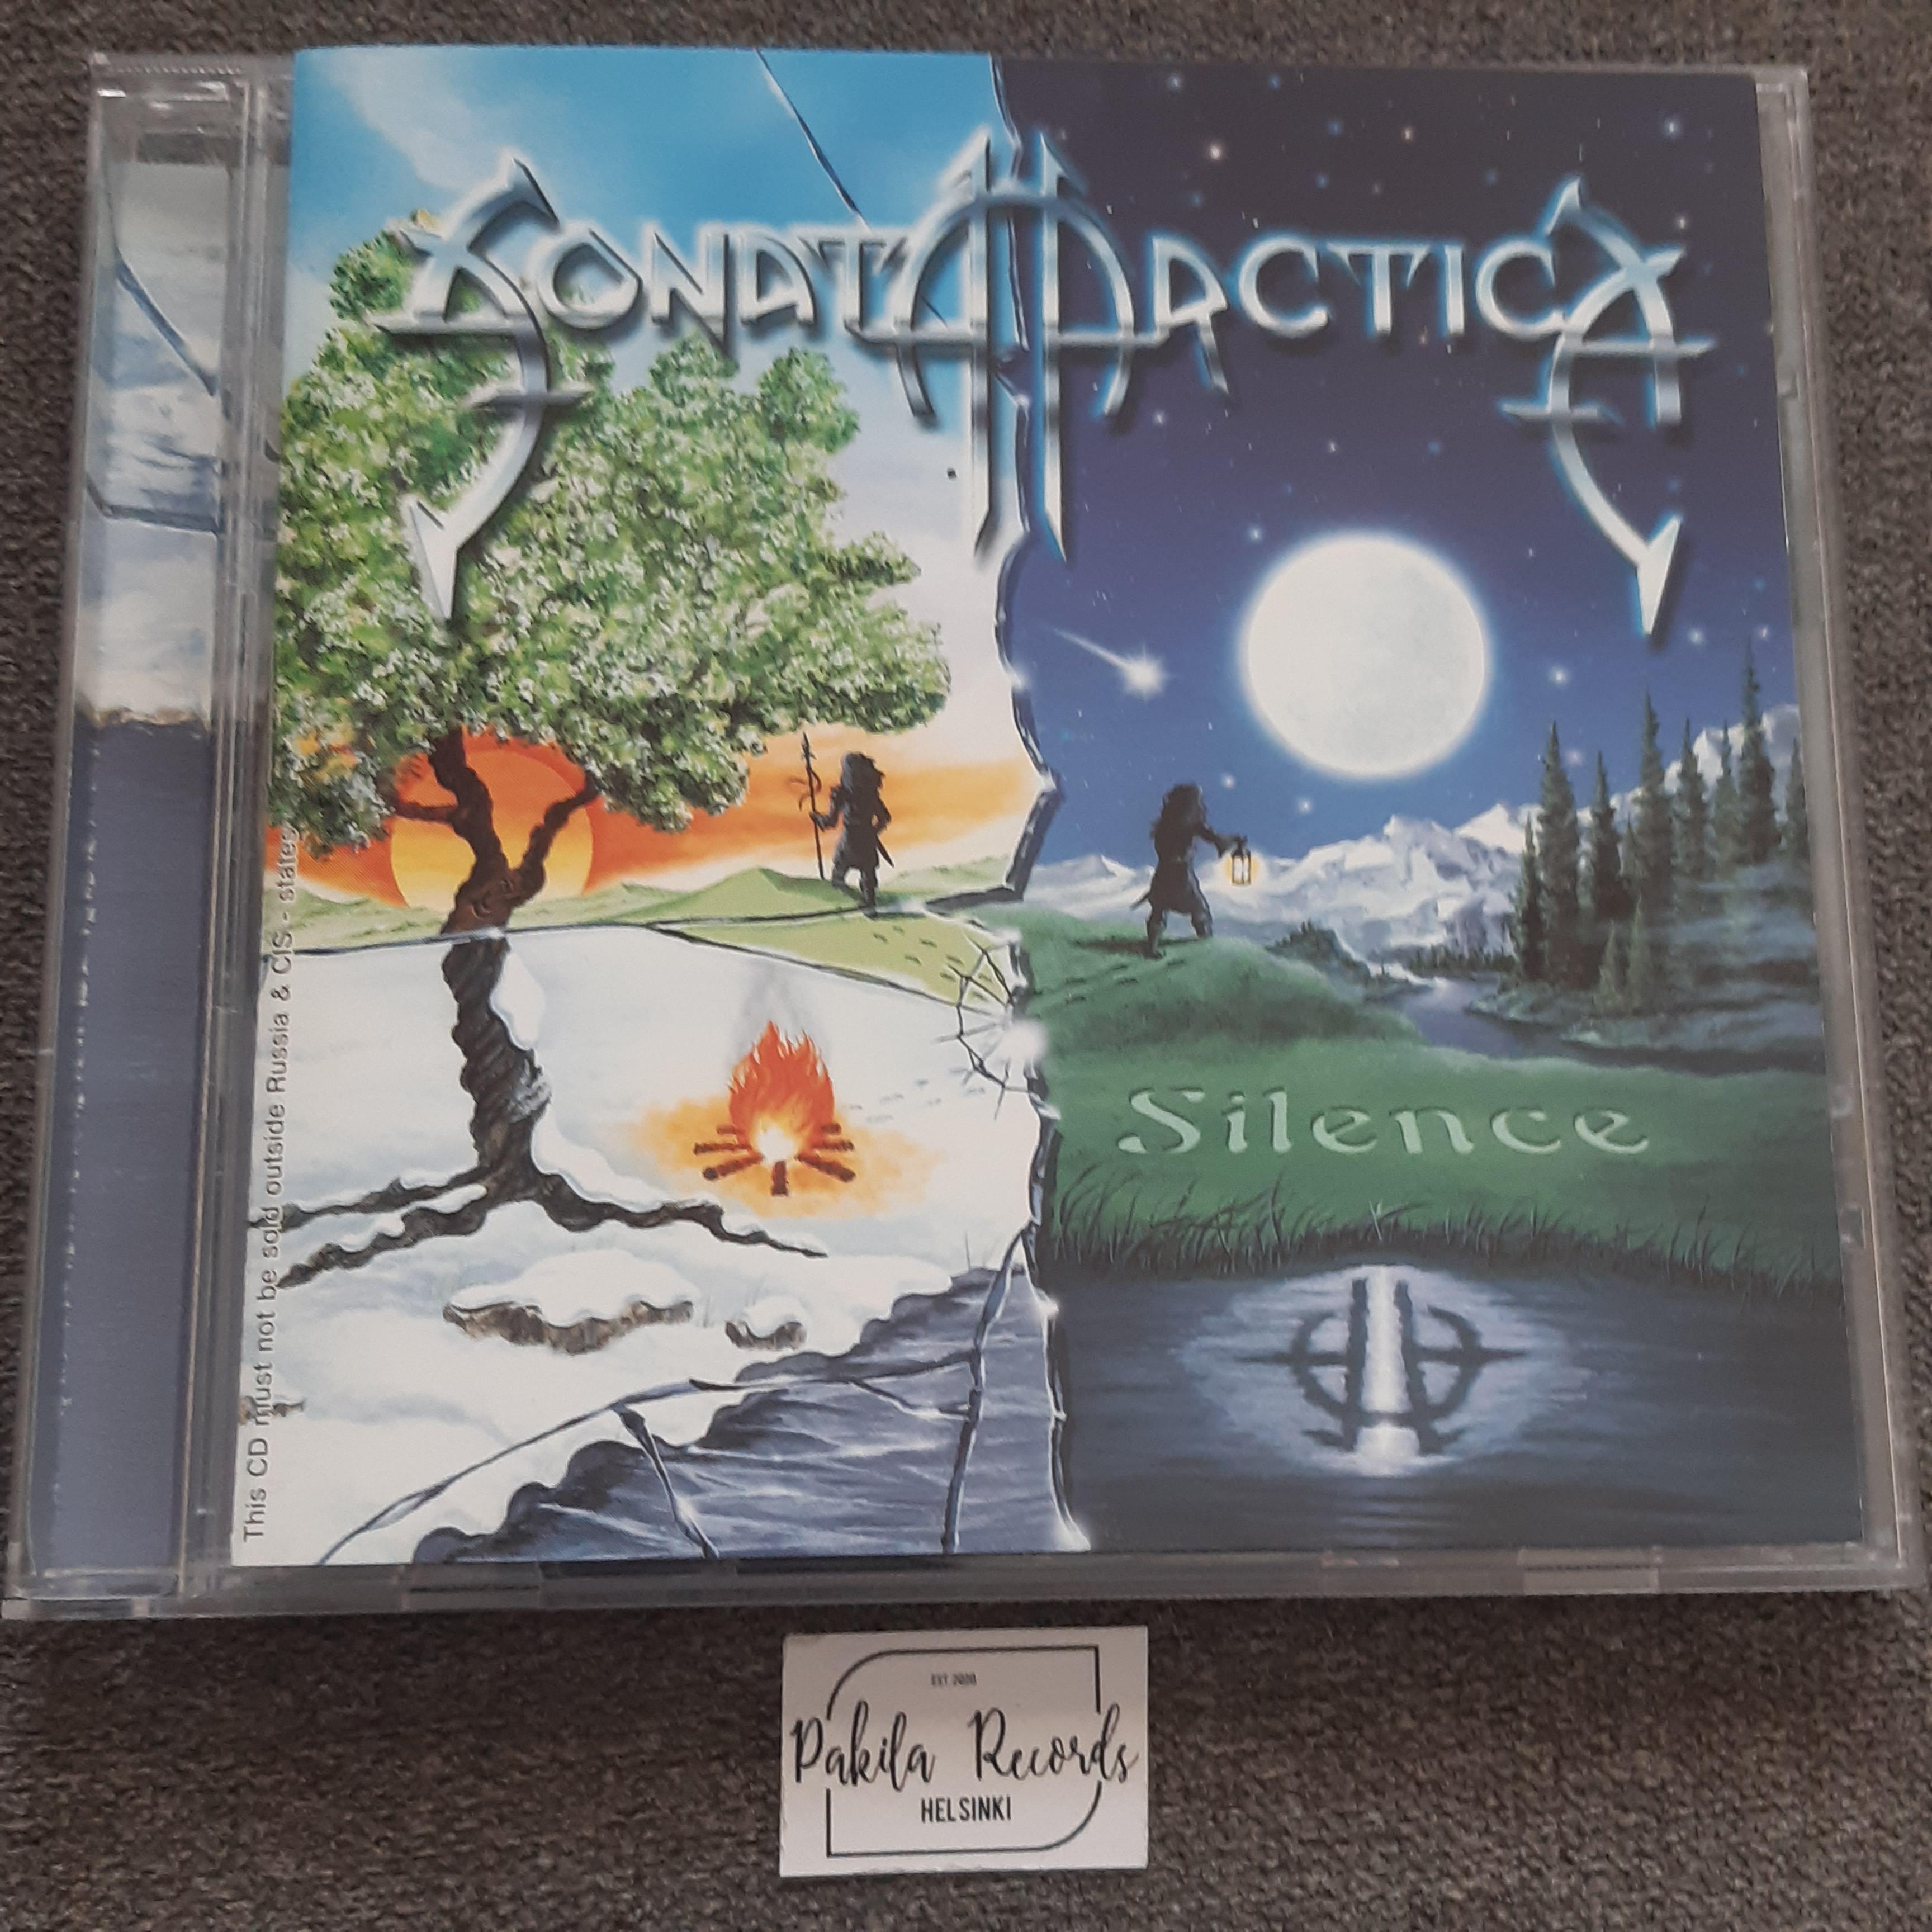 Sonata Arctica - Silence - CD (käytetty)